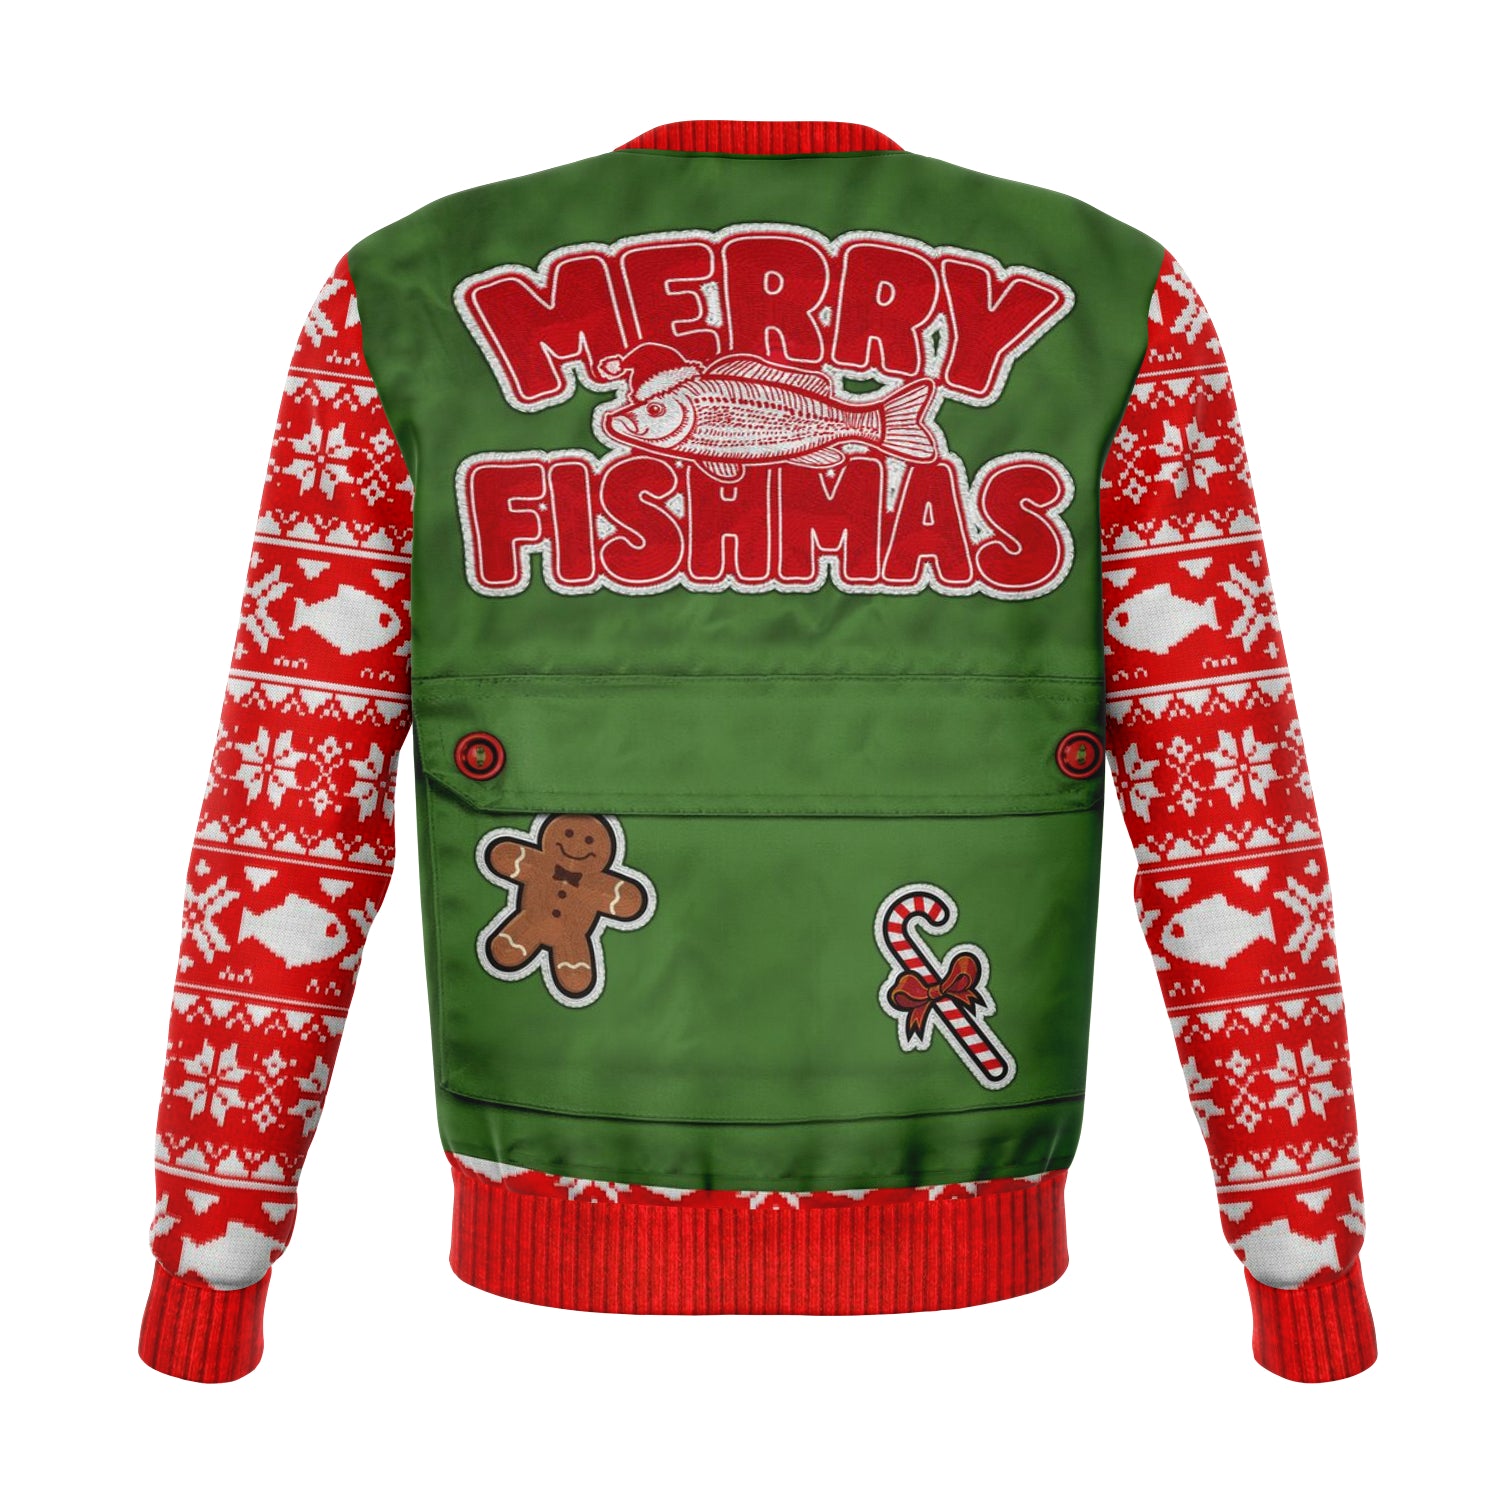 Merry Fishmas - Ugly Christmas Sweater